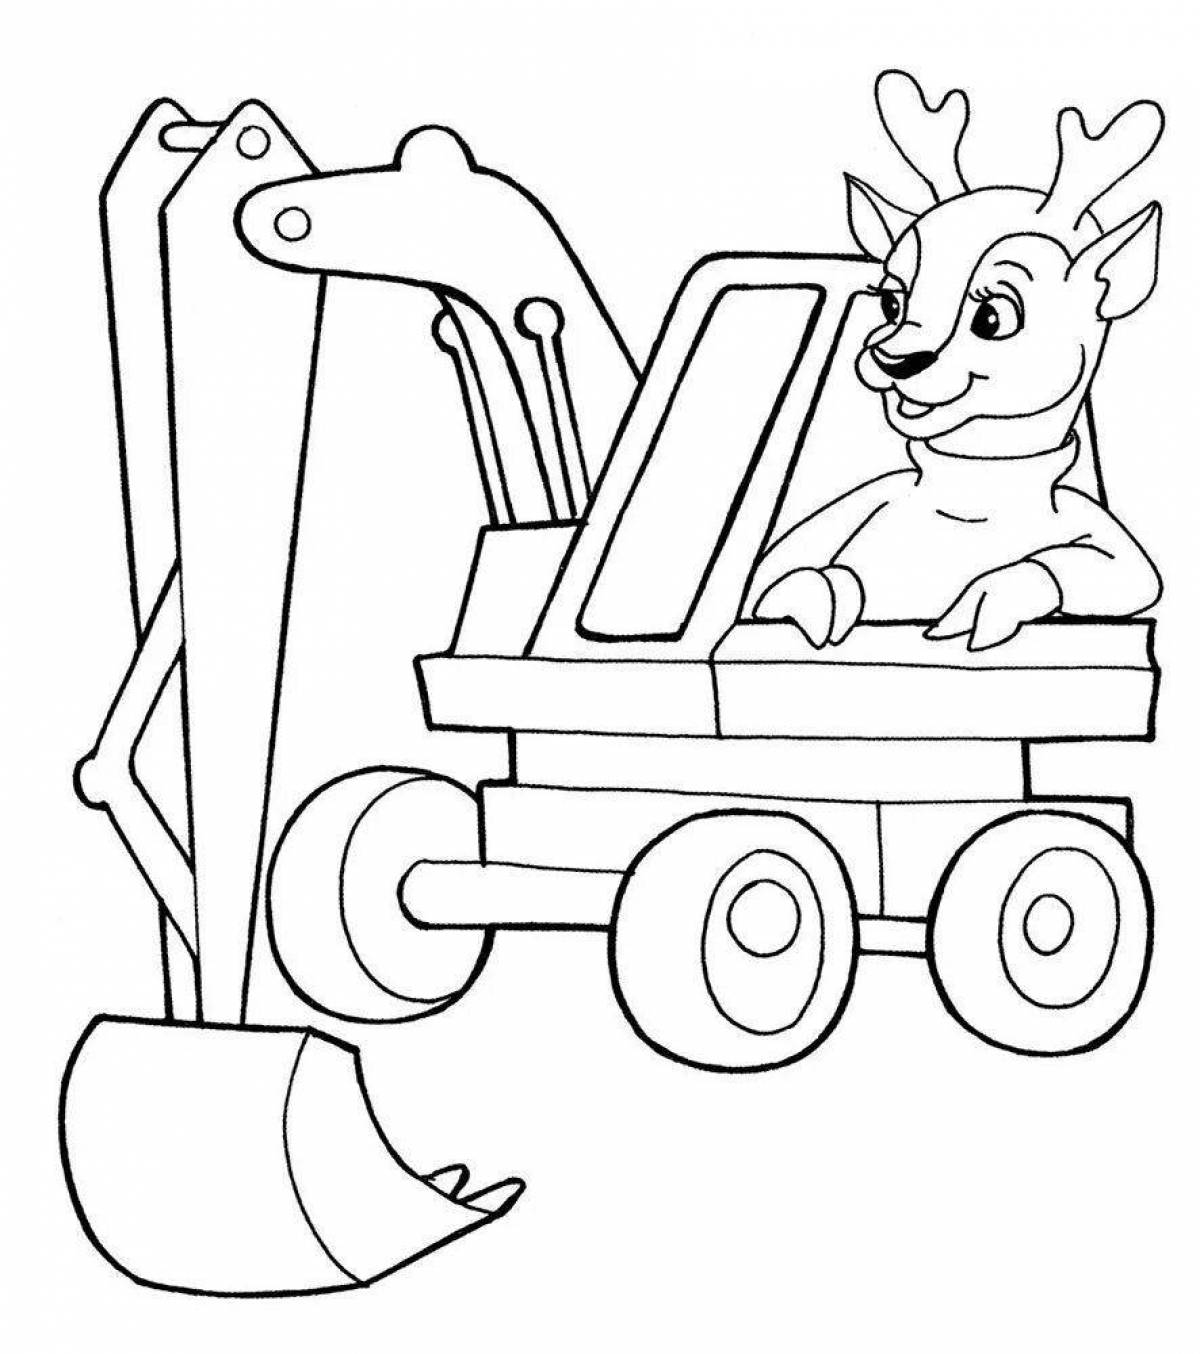 Coloring page joyful excavator tractor